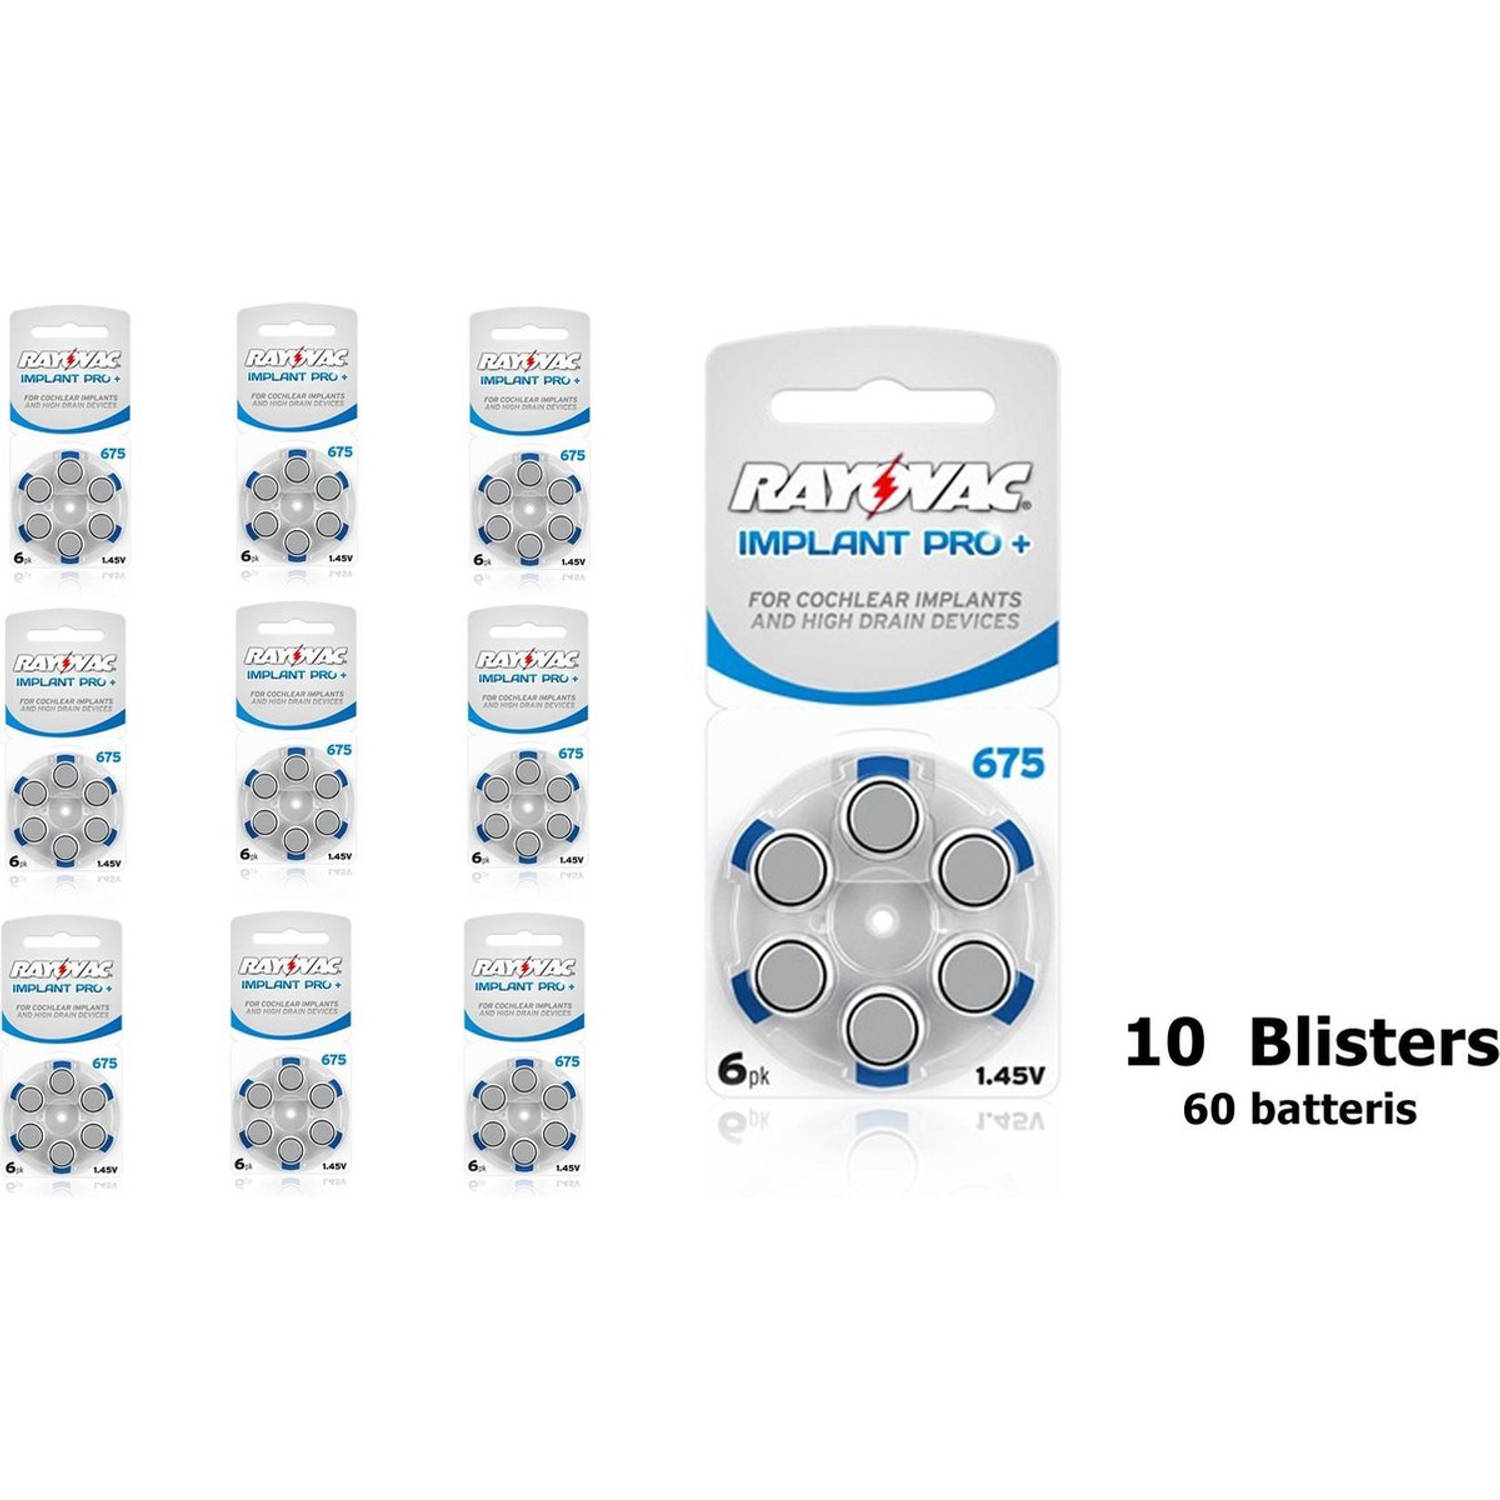 60 Stuks (10 Blisters A 6st) Rayovac 675 Implant Pro+ Gehoorapparaat Batterijen